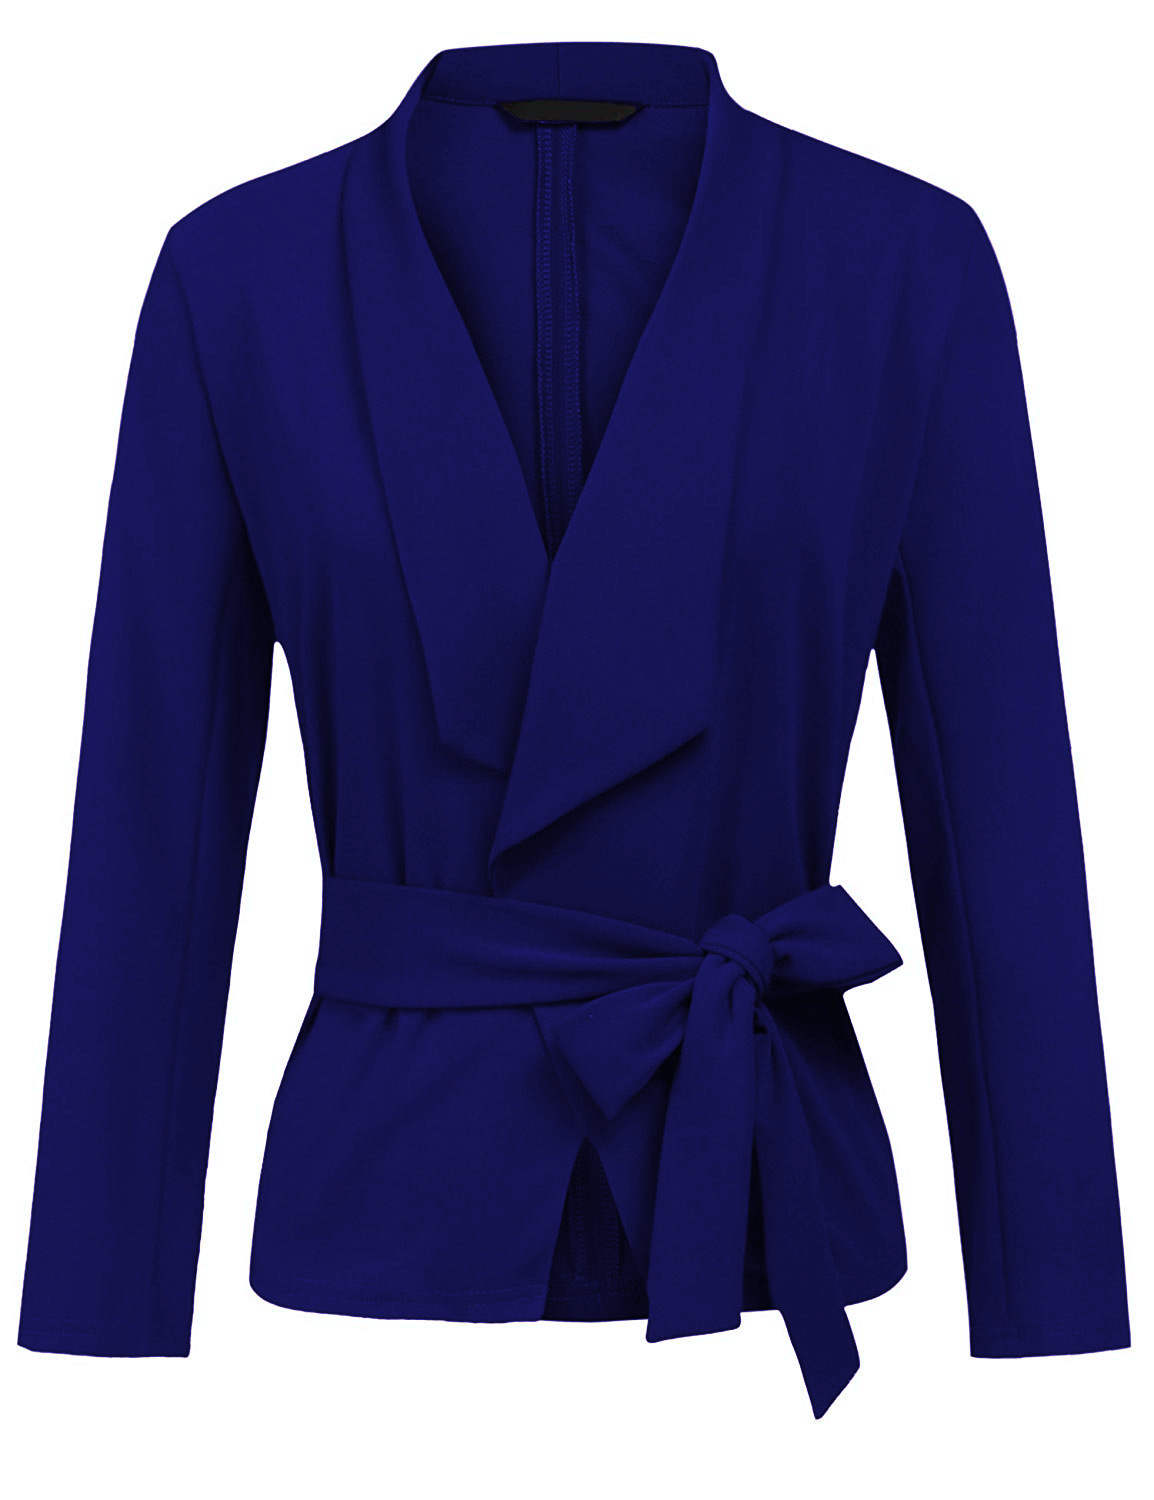 Women Blazer Coat Autumn Long Sleeve Belted Casual Work Office Lady Slim Suit Jacket royal blue